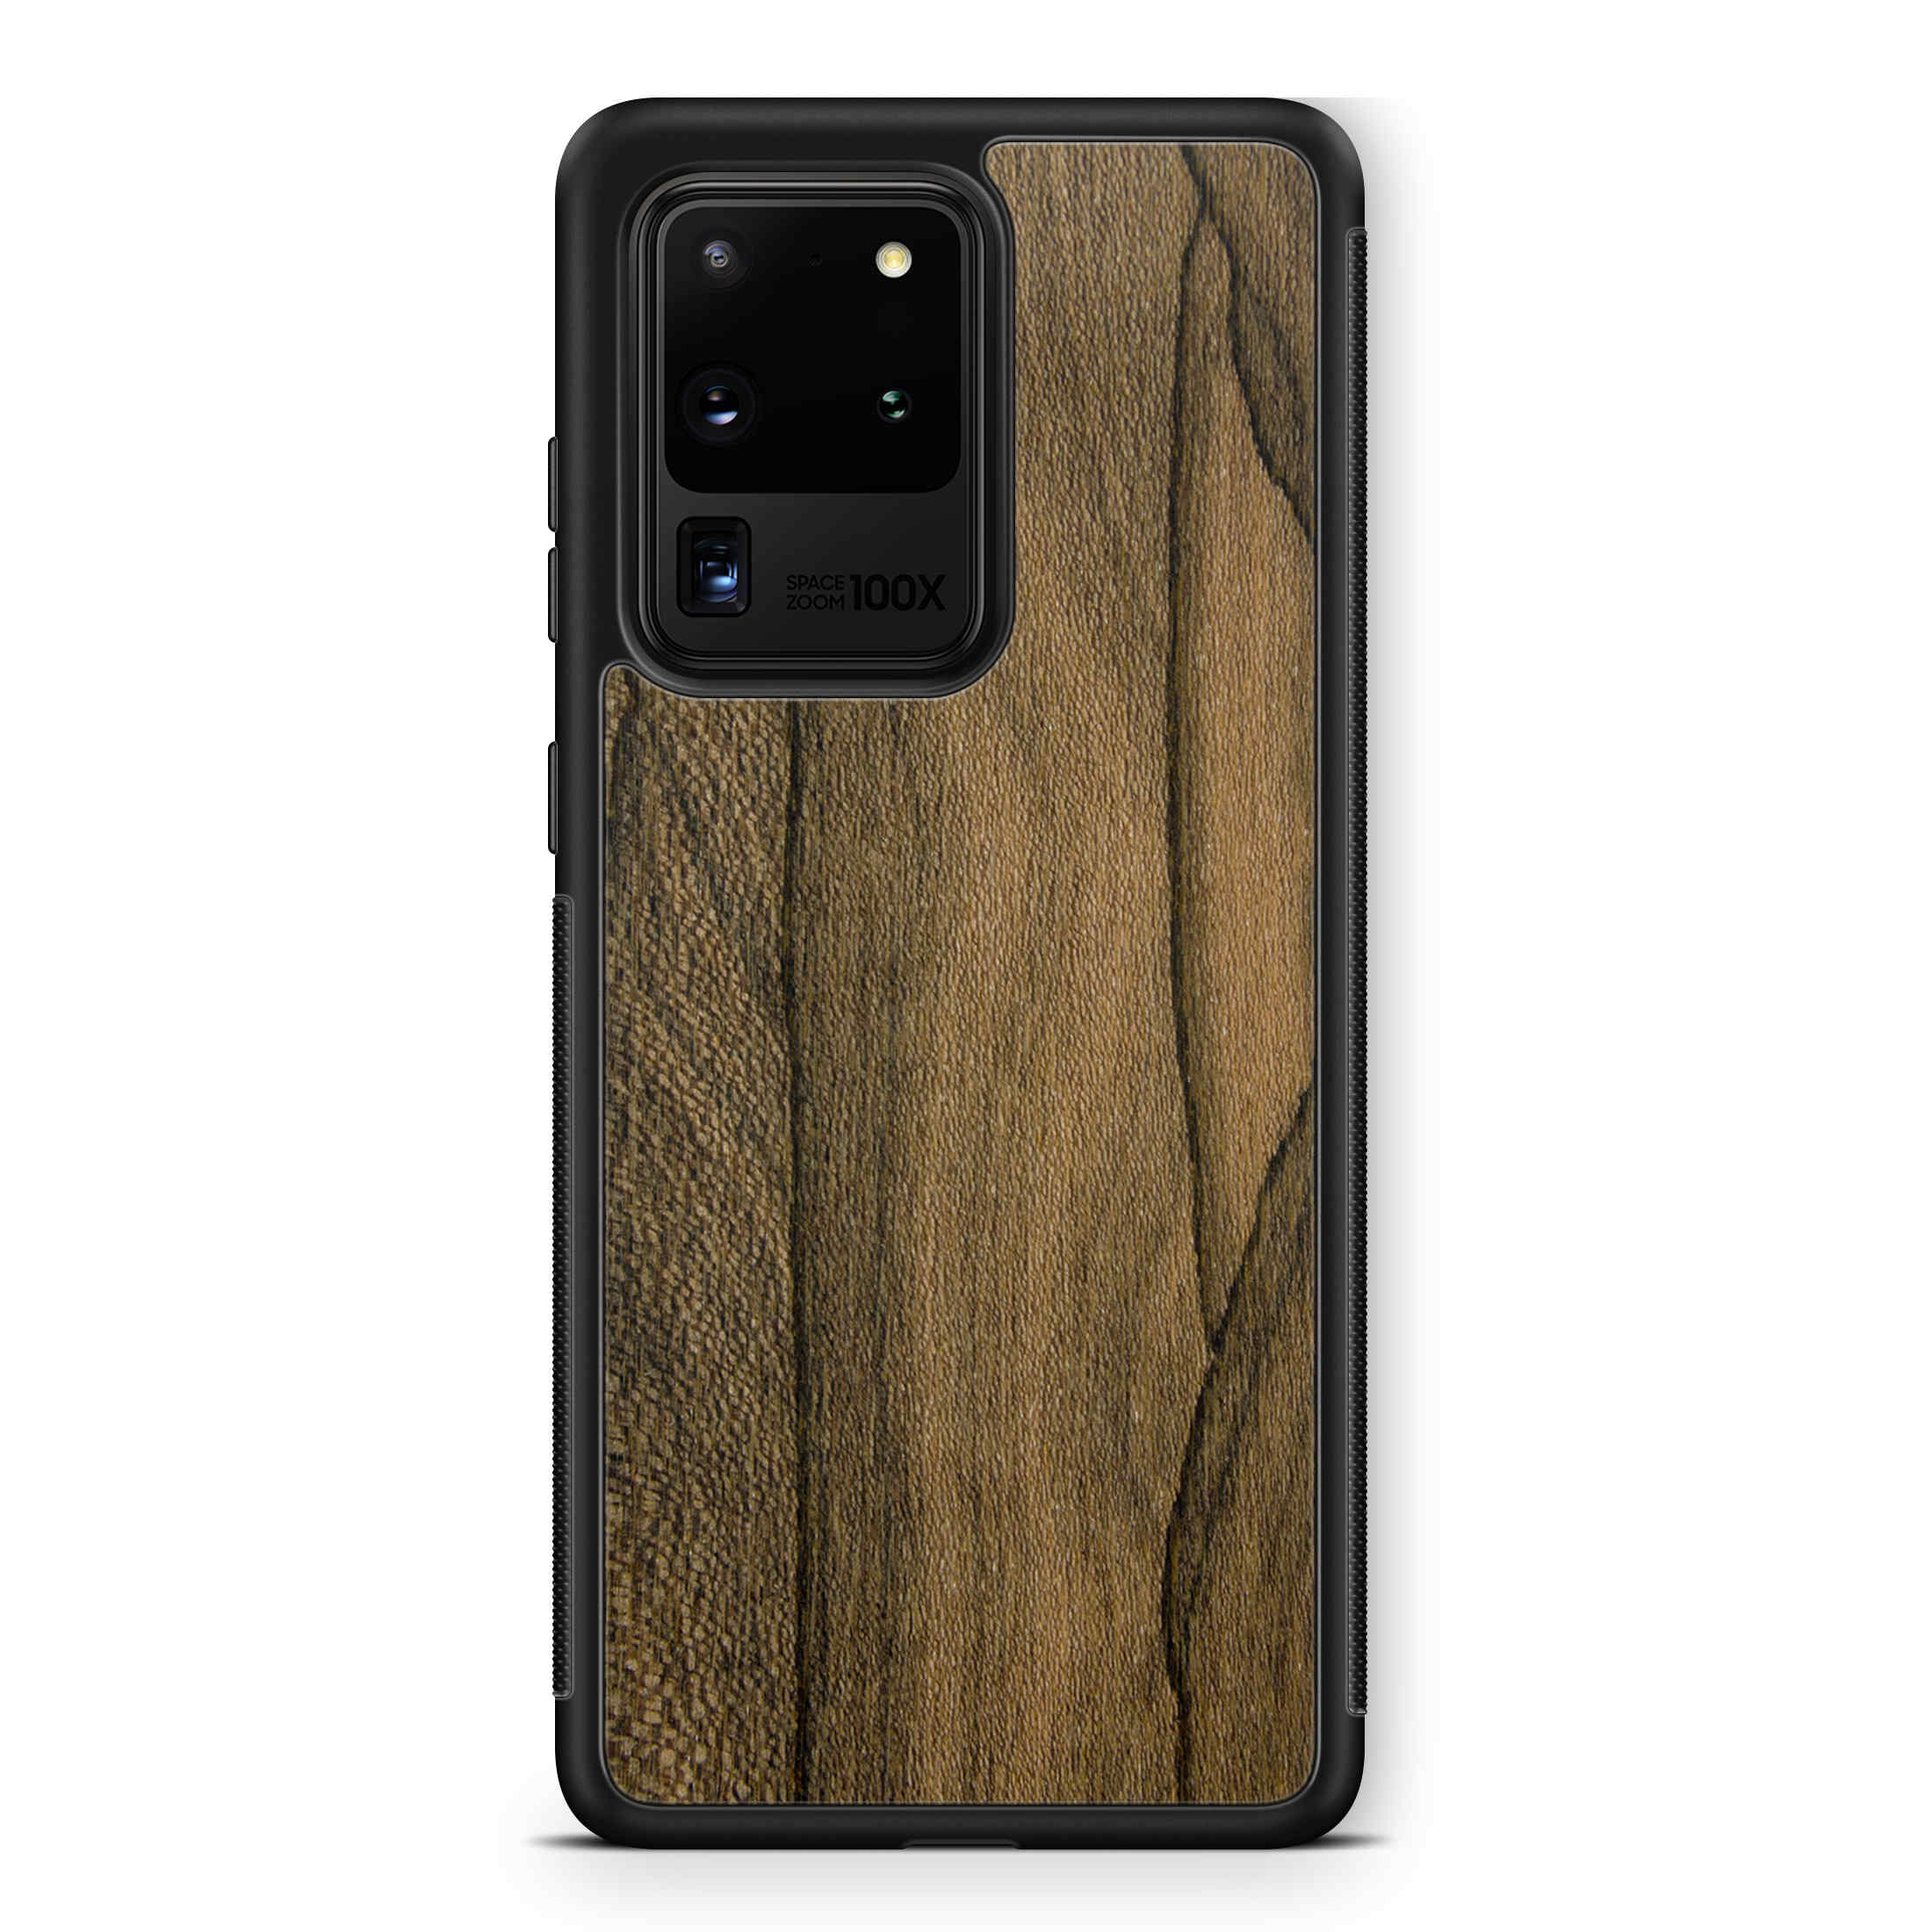  Ziricote Wood Samsung S20 Ultra Phone Case 